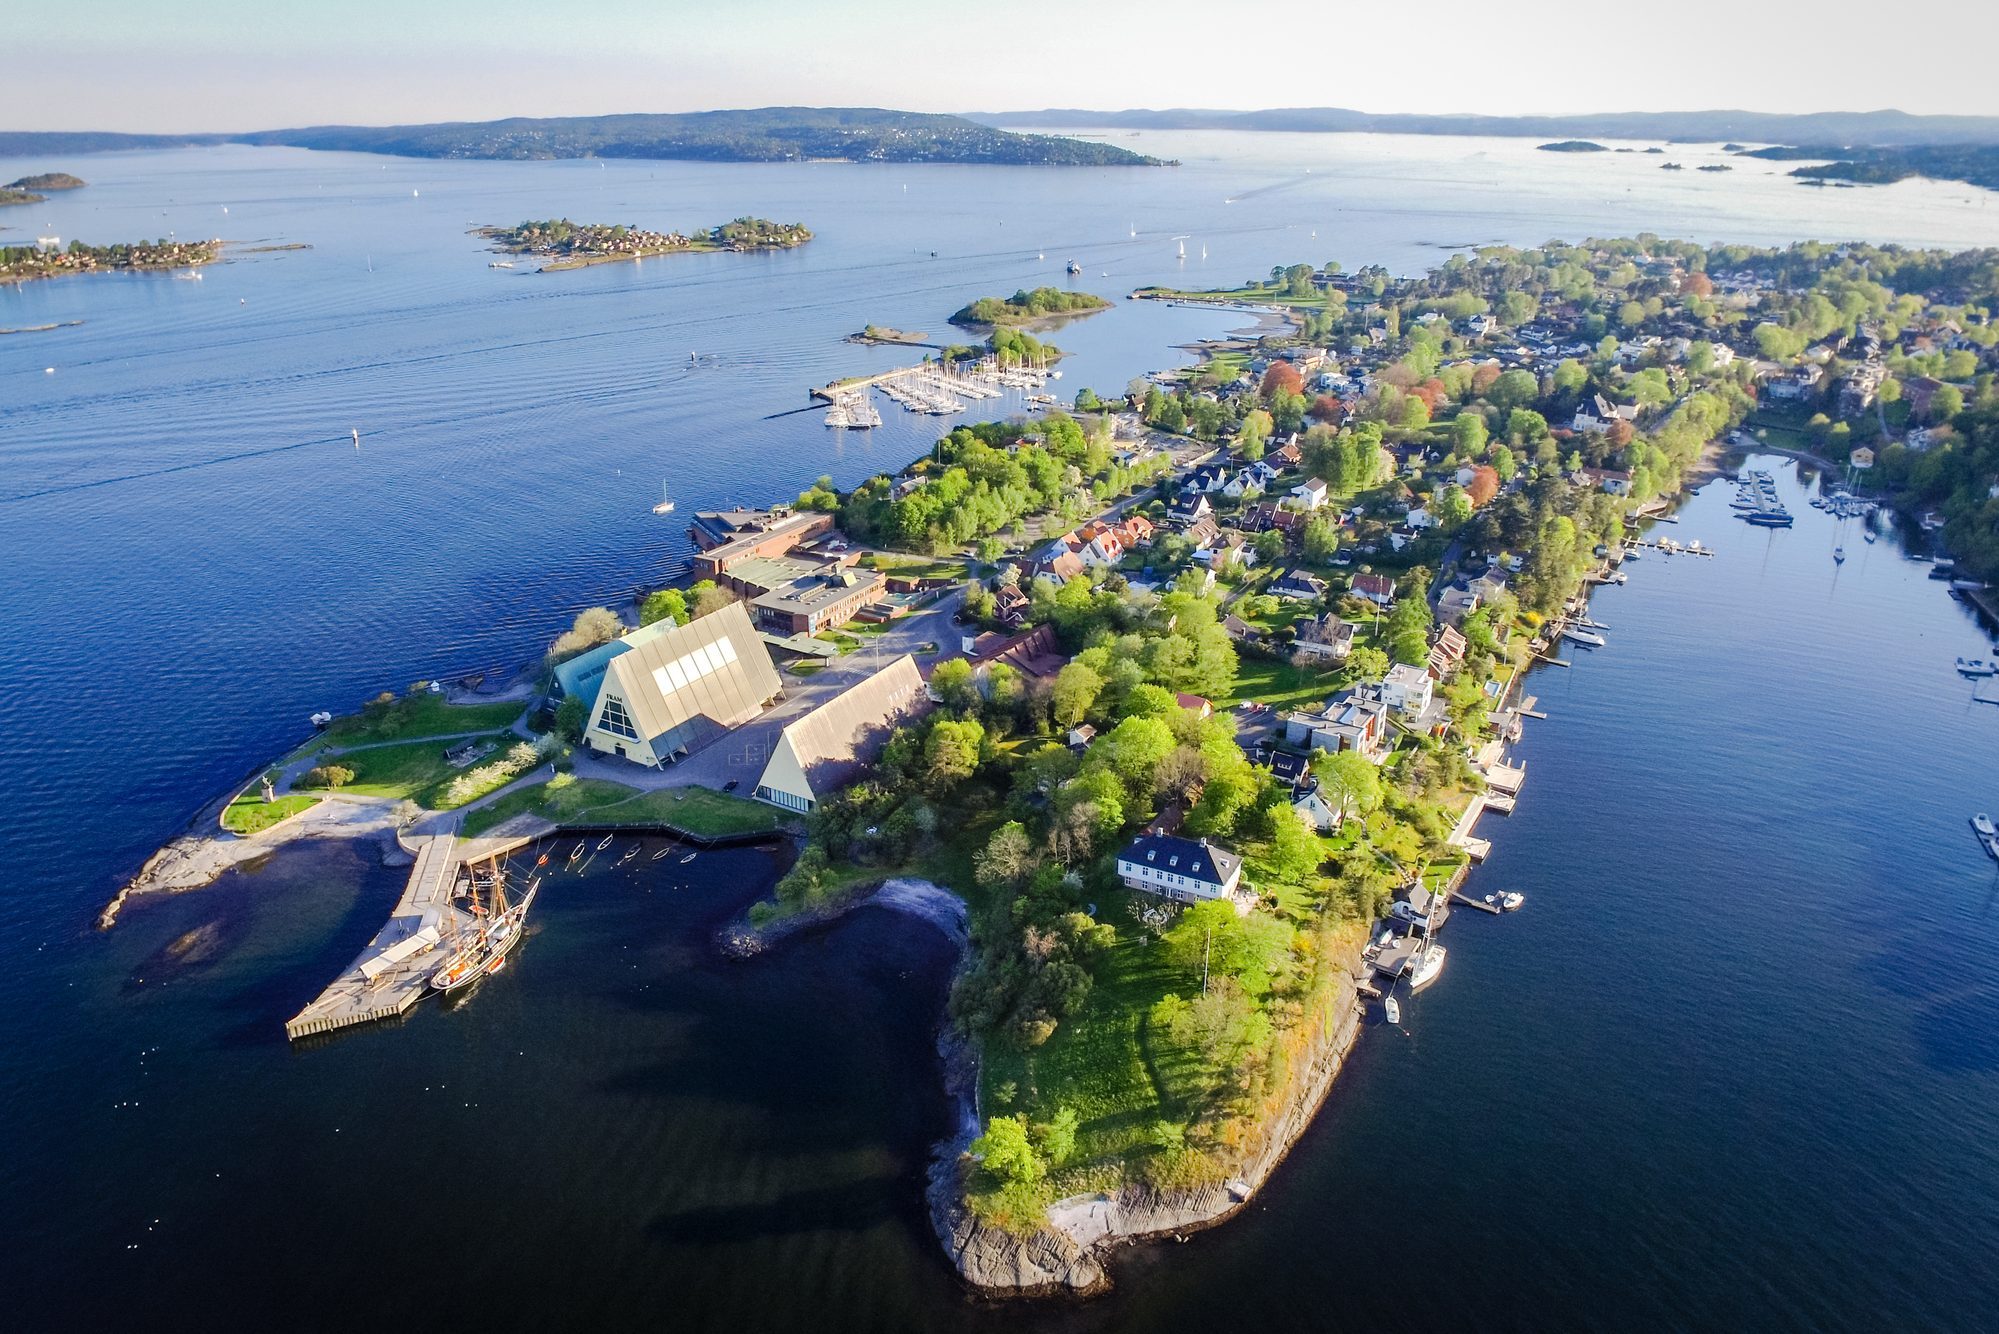 The Bygdøy peninsula in Oslo, Norway